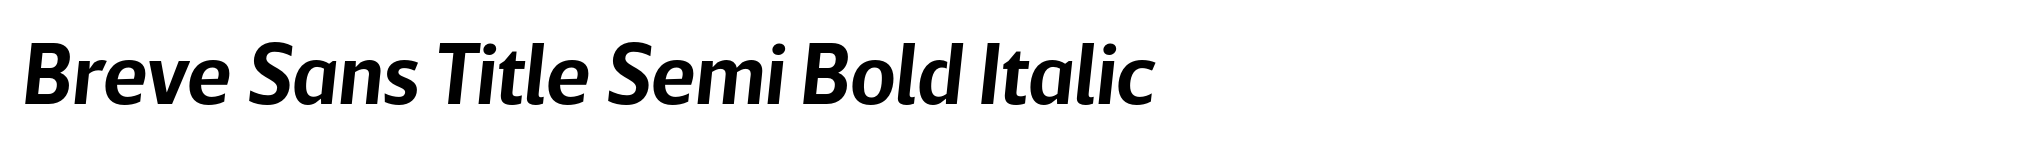 Breve Sans Title Semi Bold Italic image